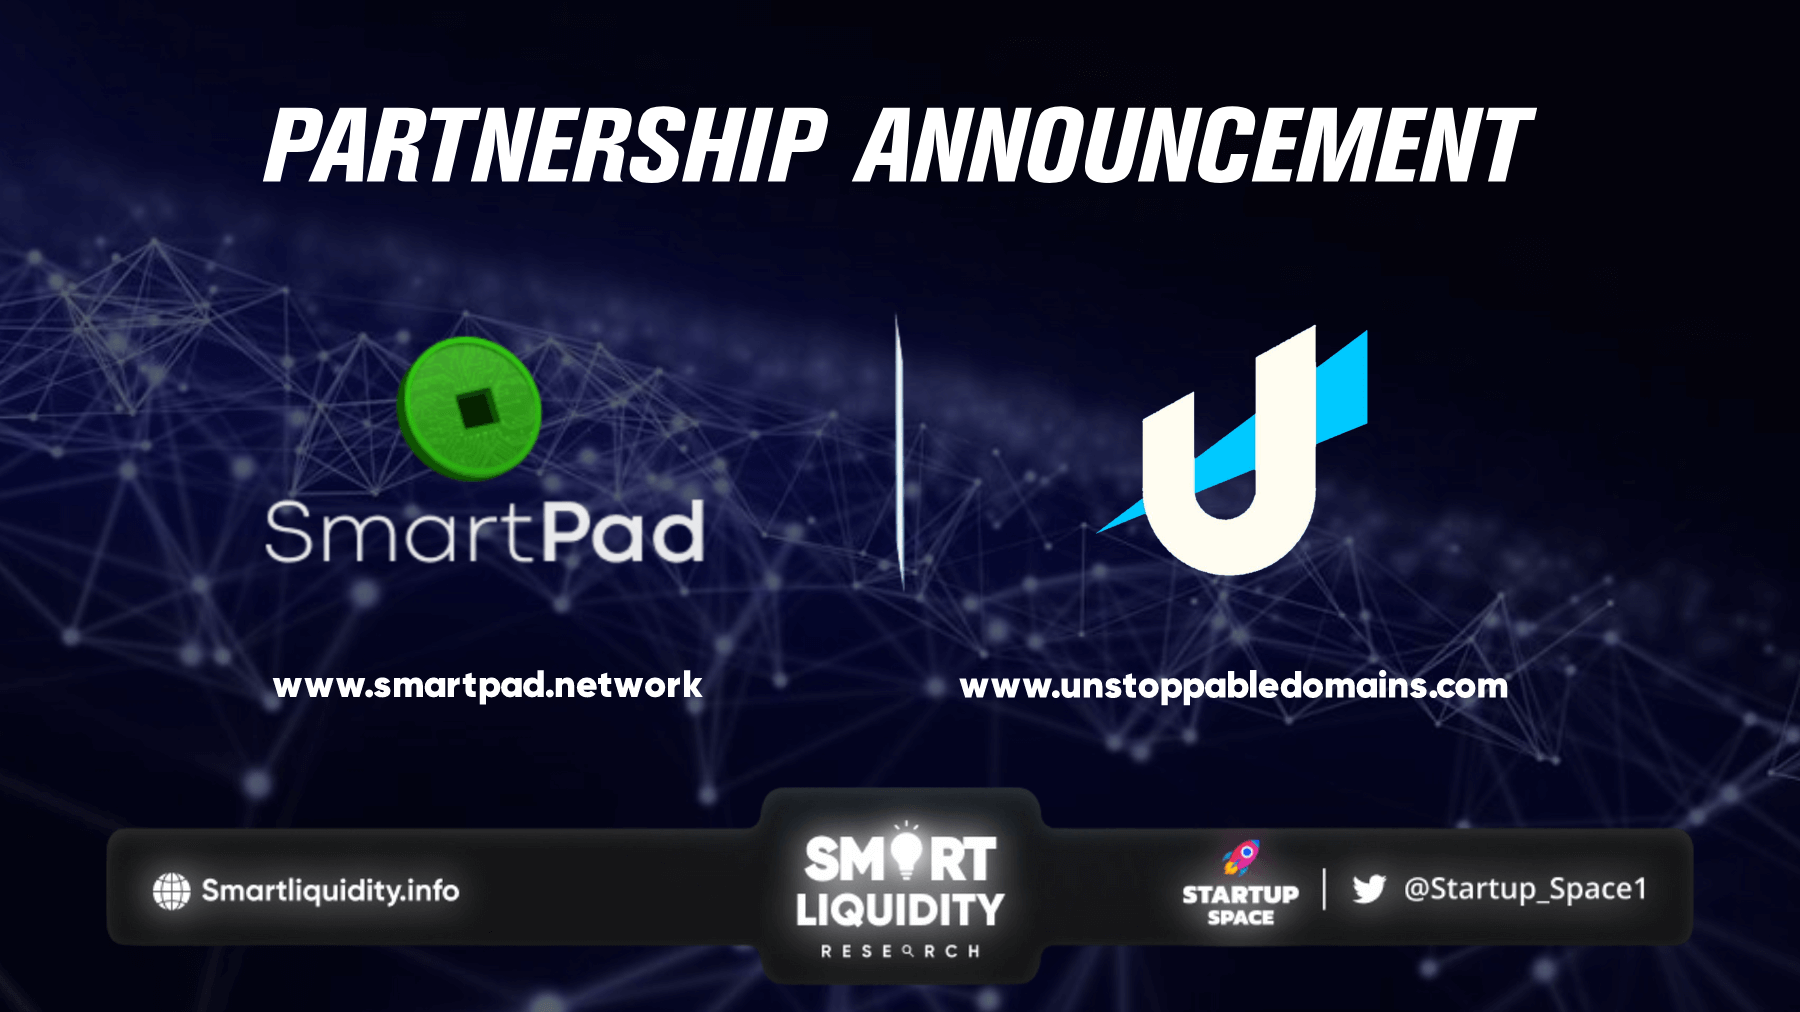 SmartPad x Unstoppable Domains Partnership!